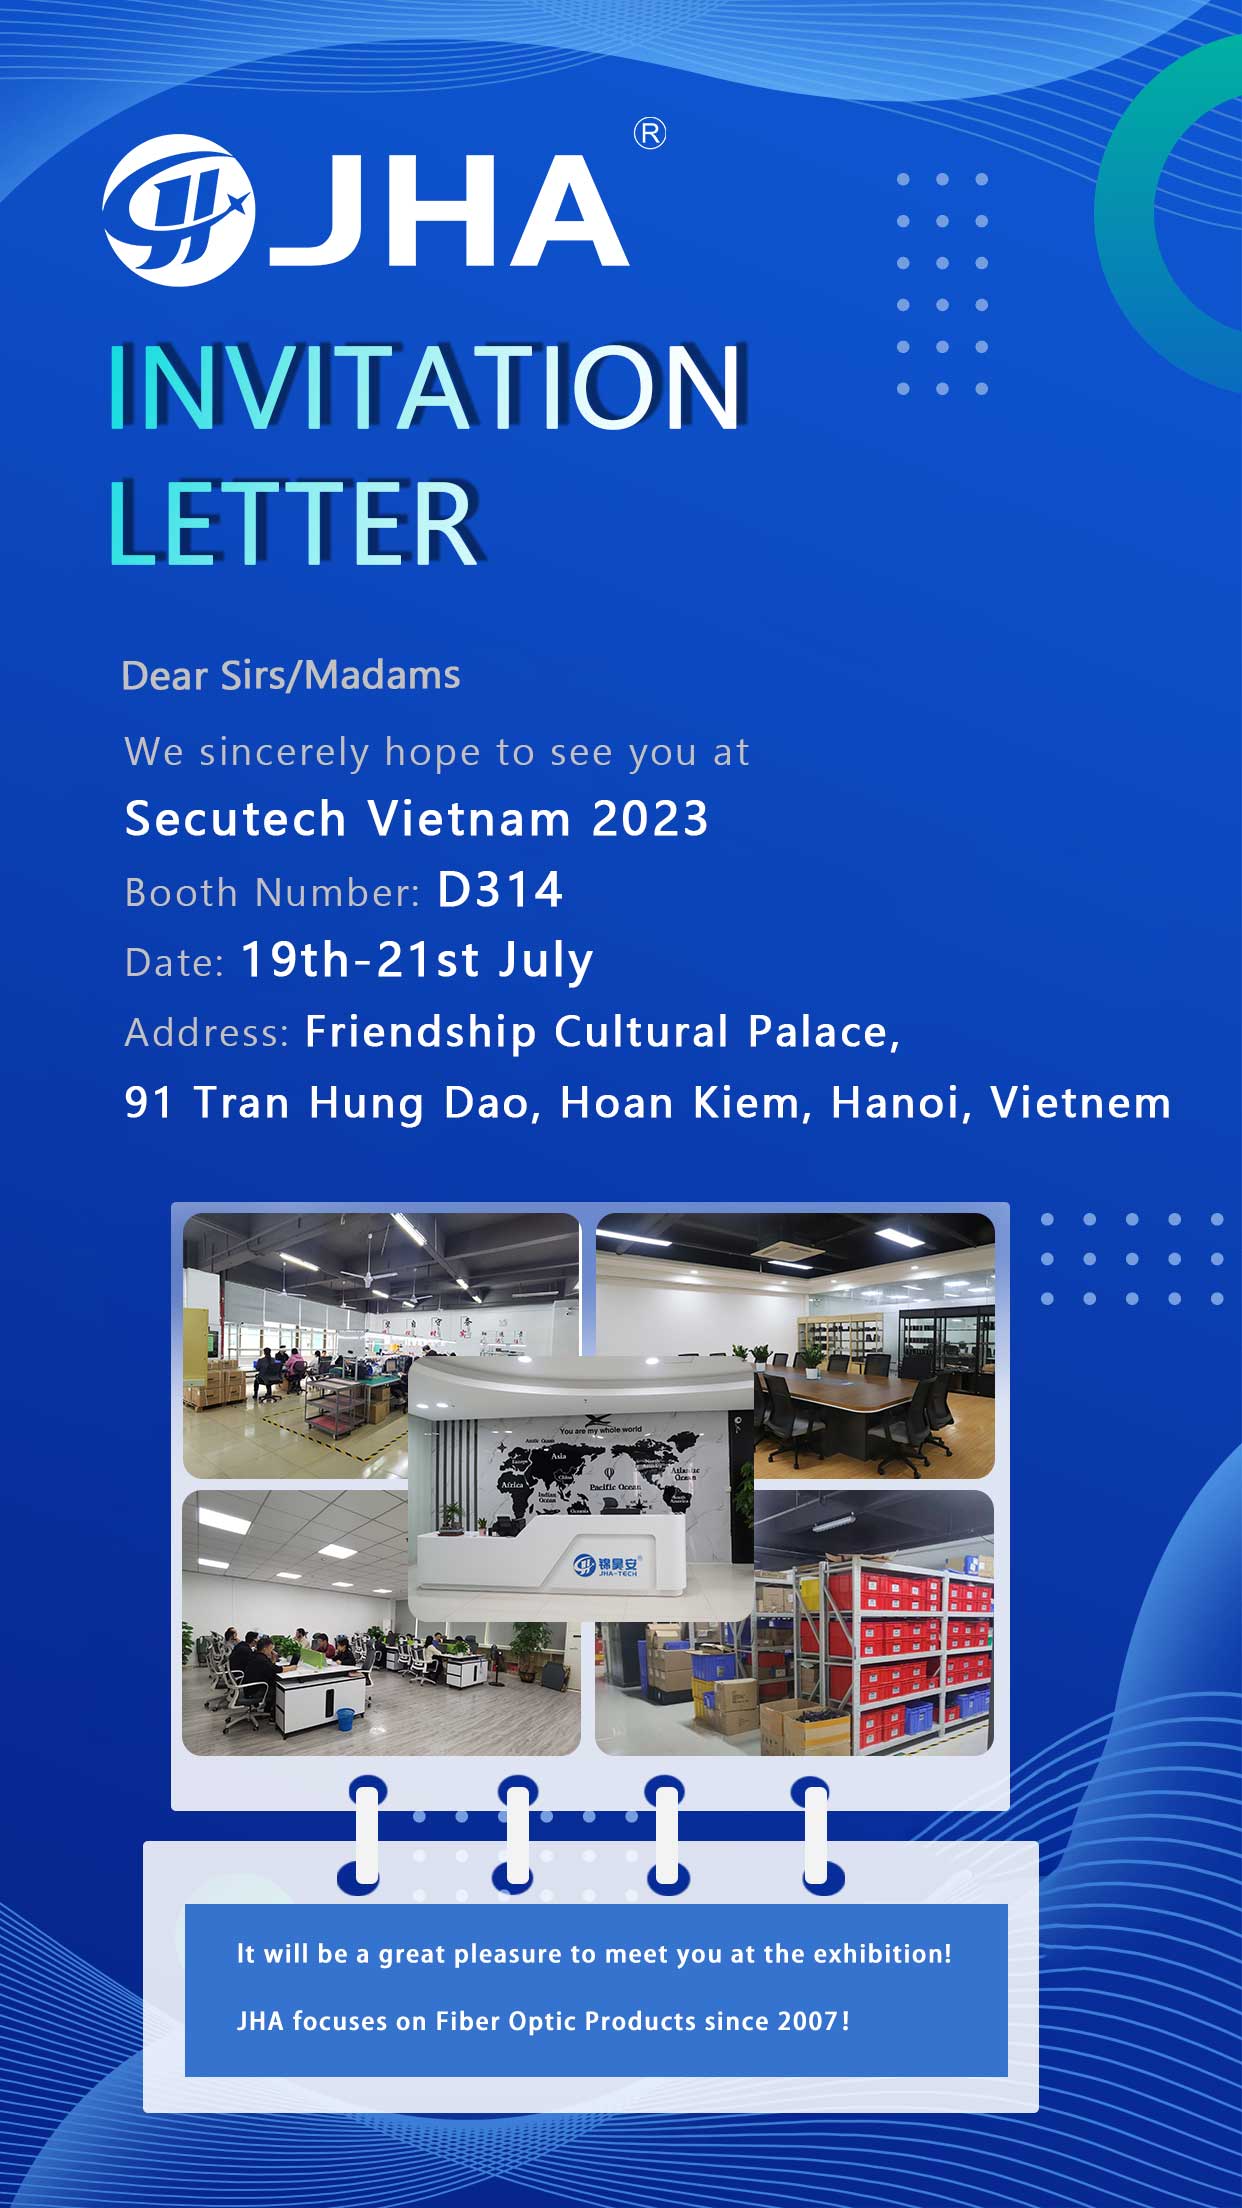 Liituge meiega Secutech Vietnam 2023 – boksi number D314